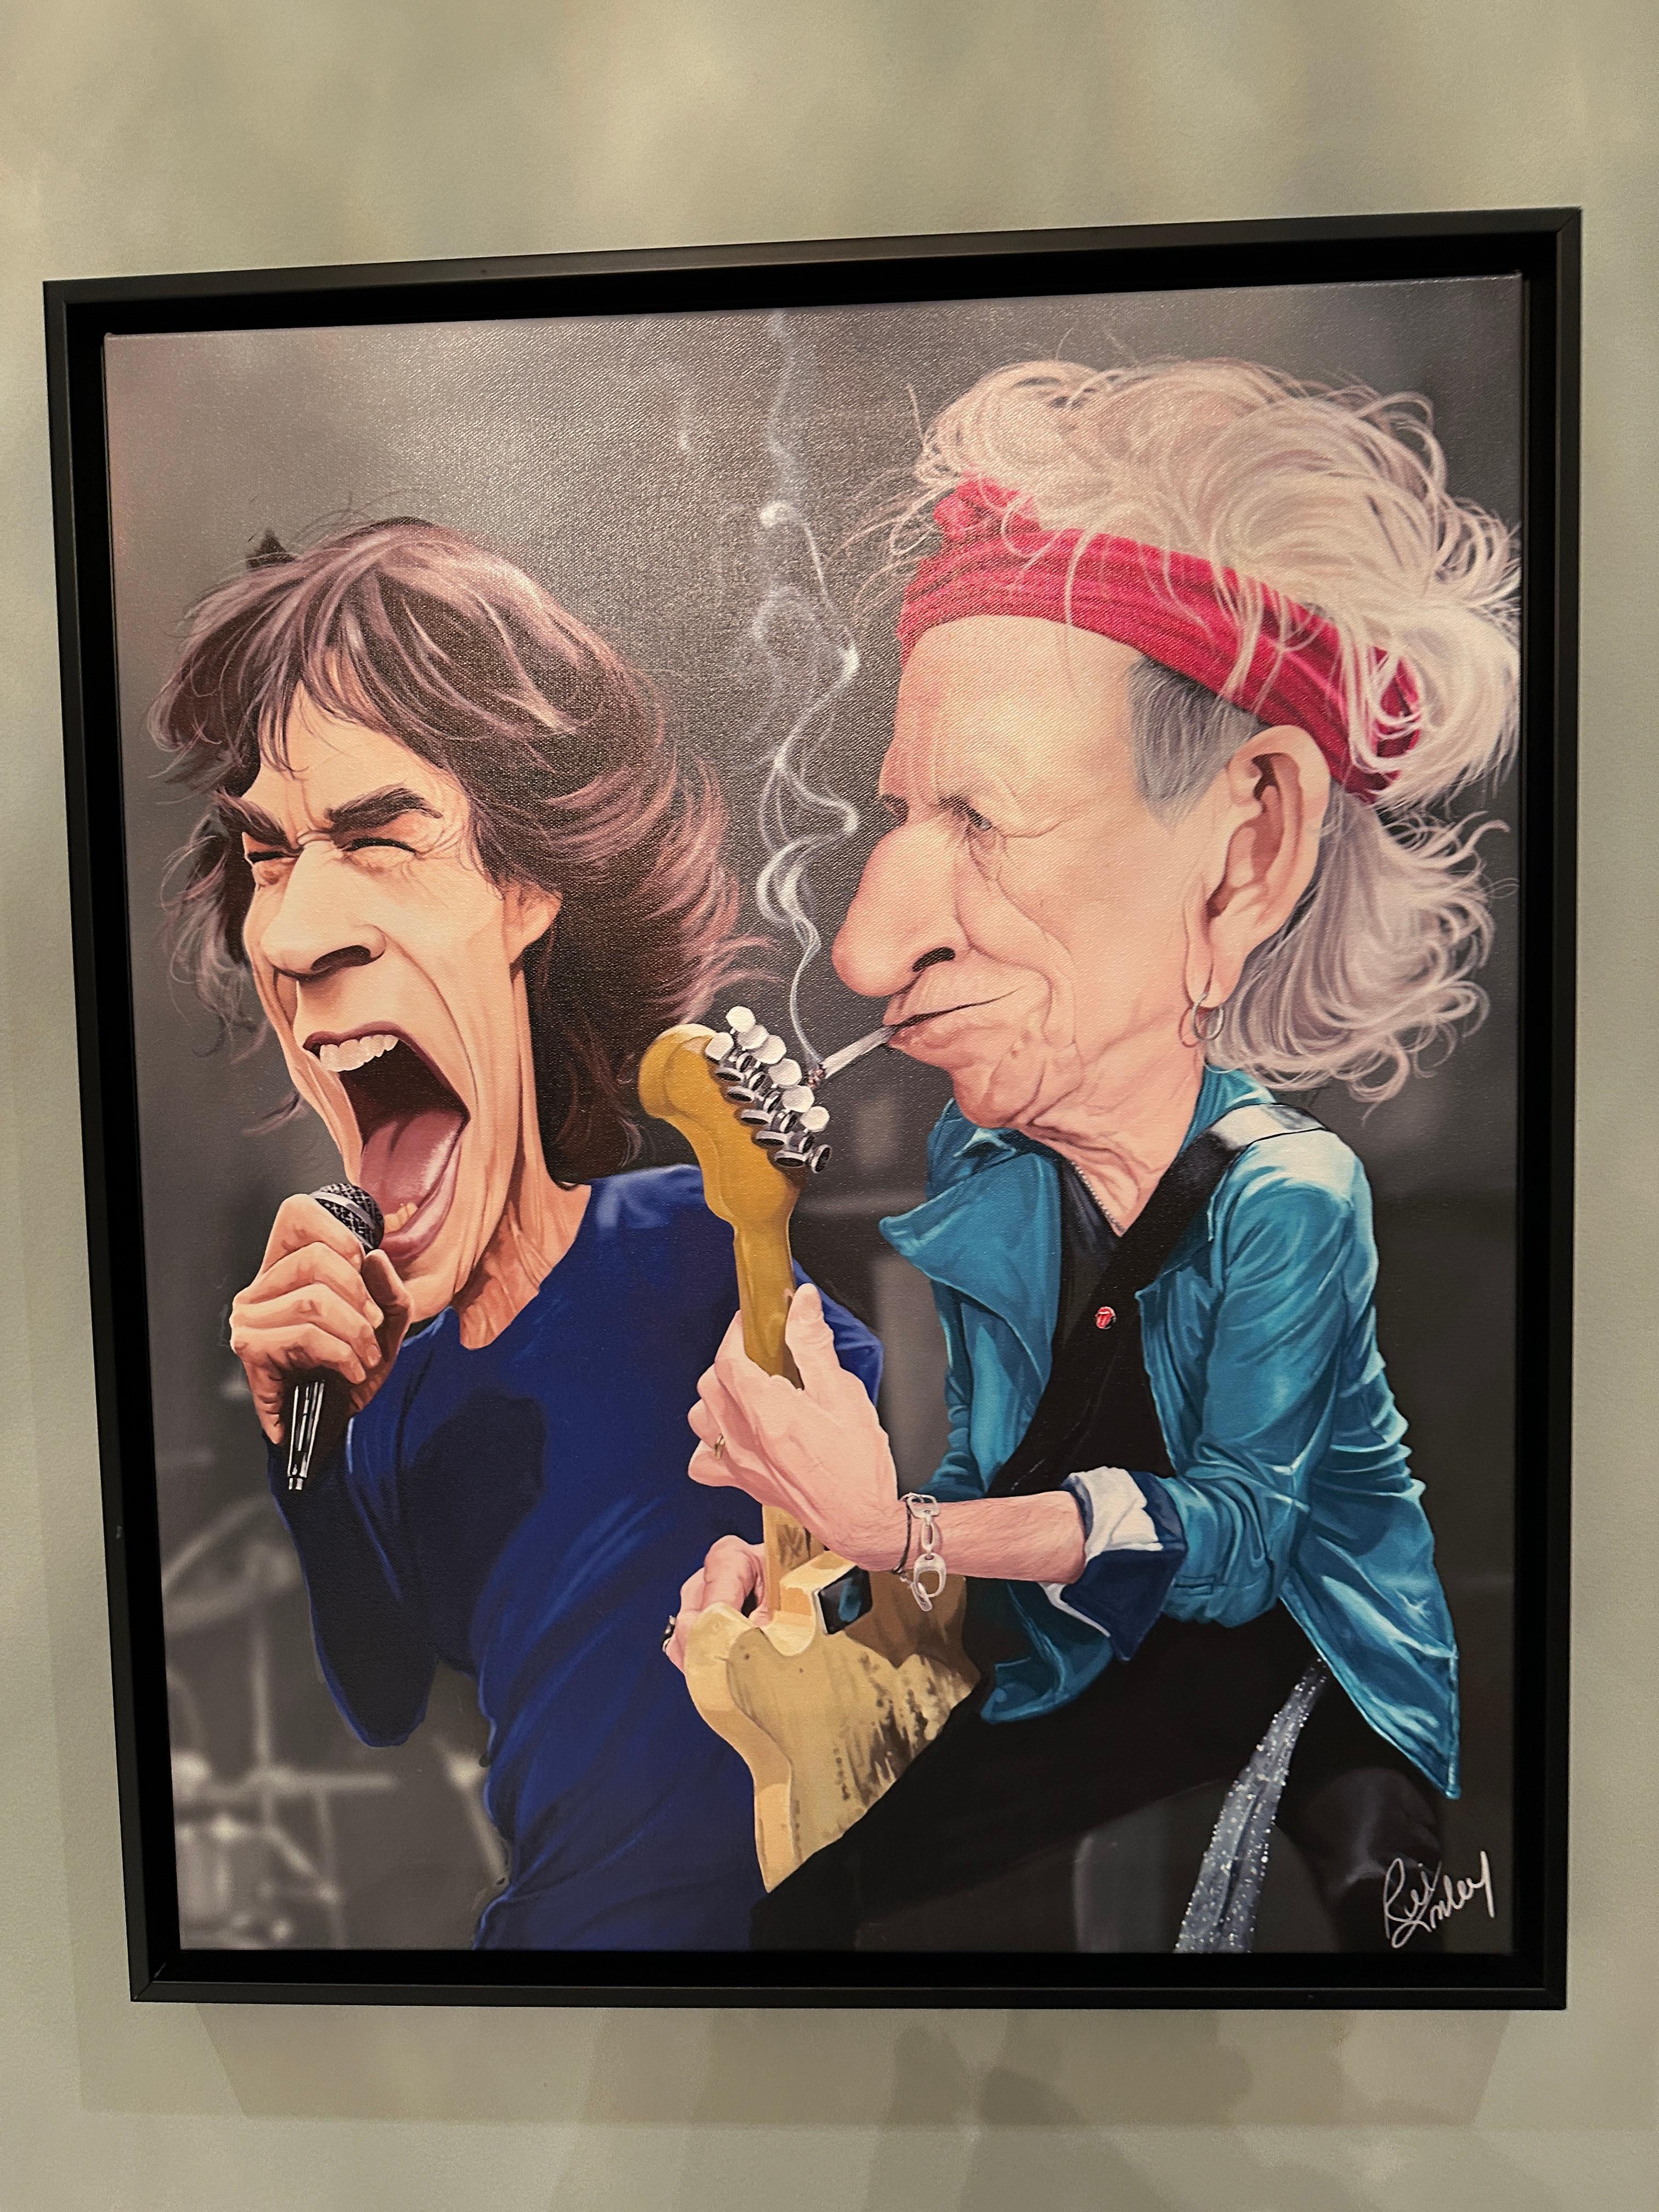 Rolling Stones Licensed Artwork on Canvas 7